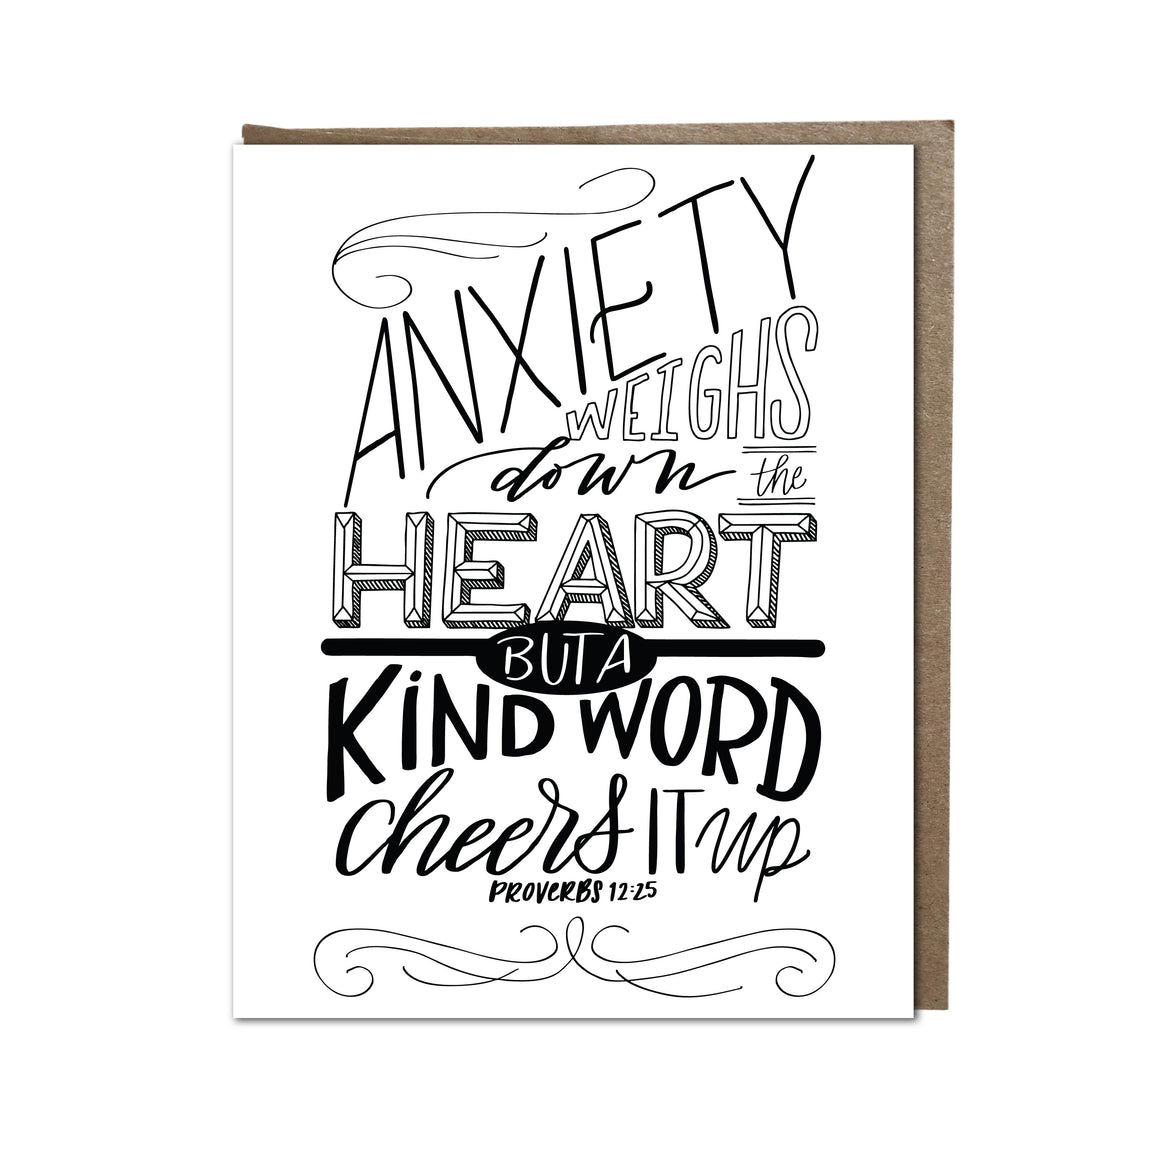 "Kind Words Cheer the Heart" card